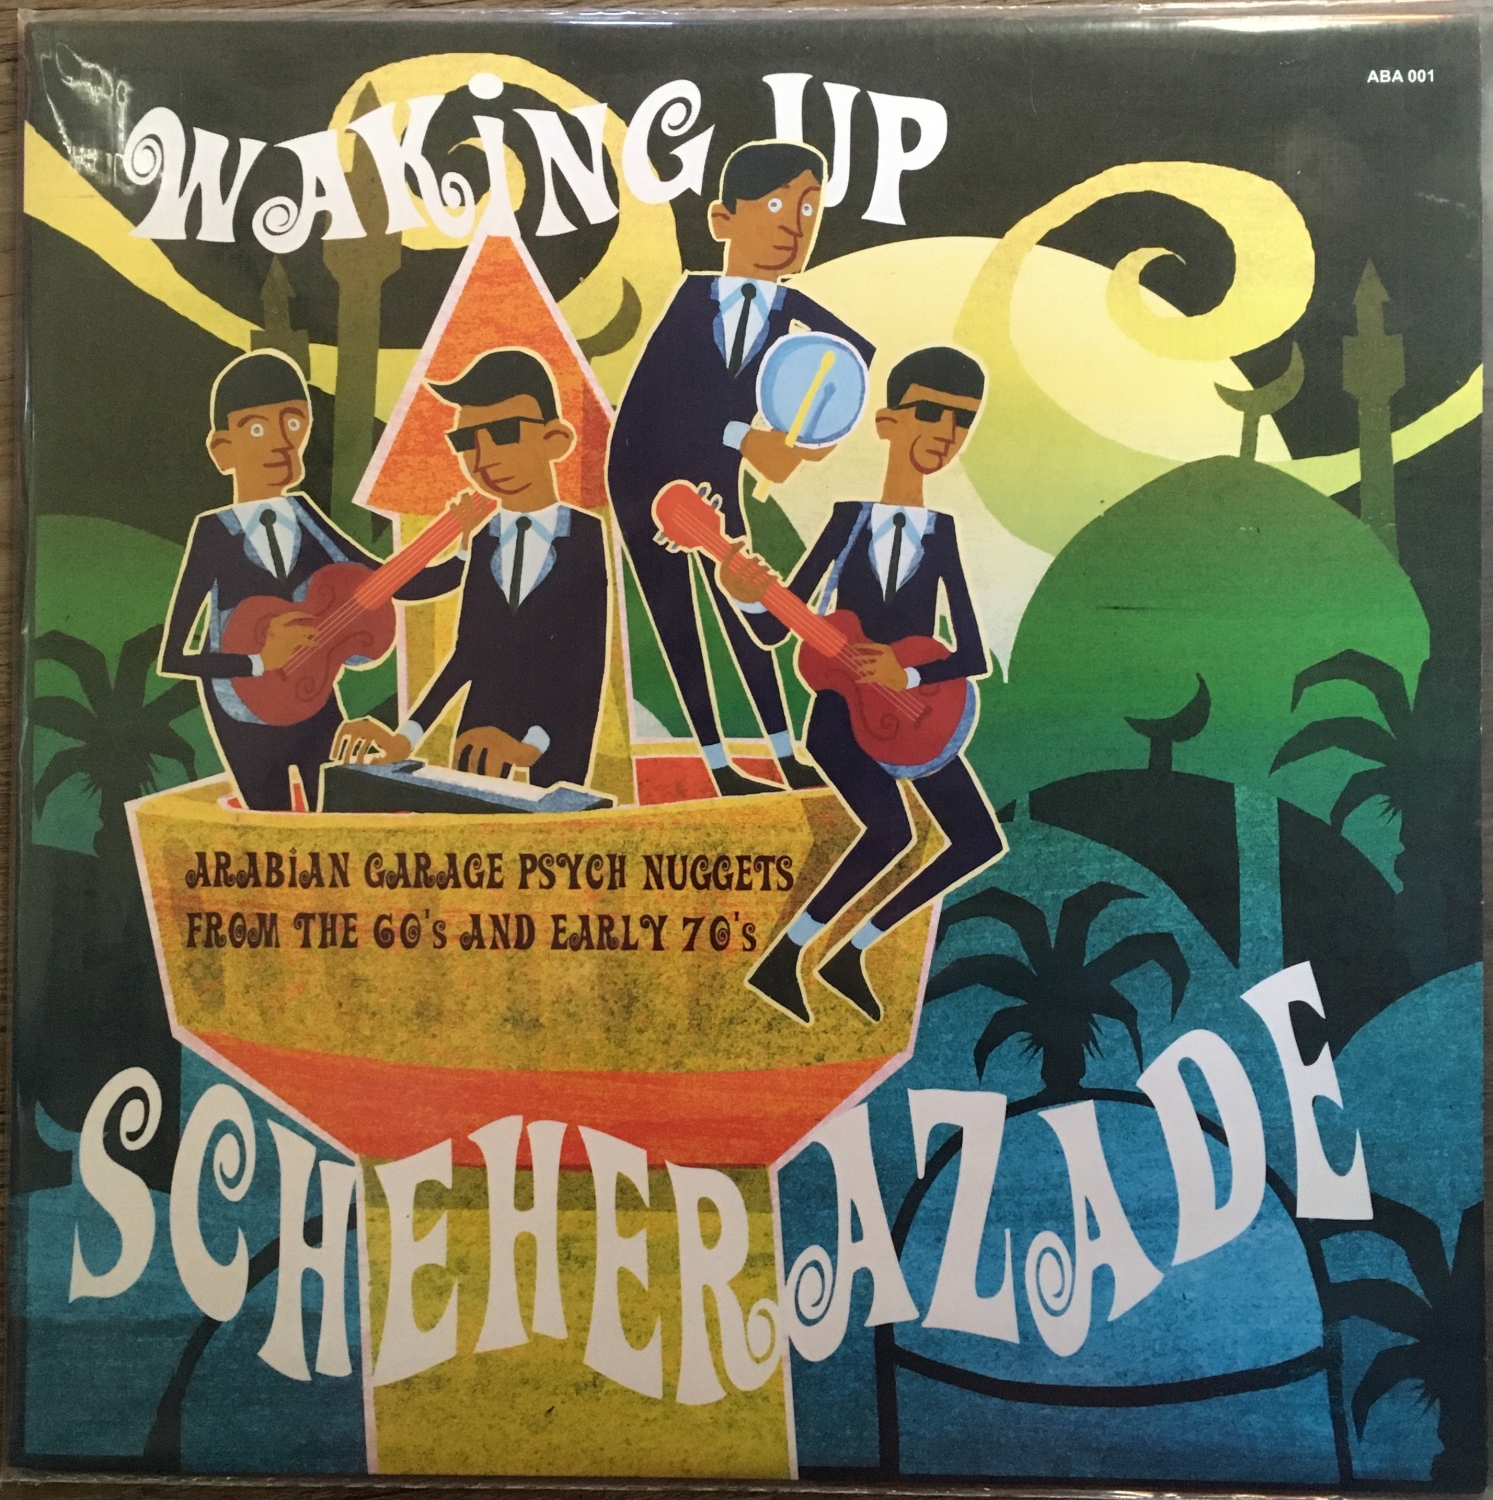 Waking up sheherezade vol 1